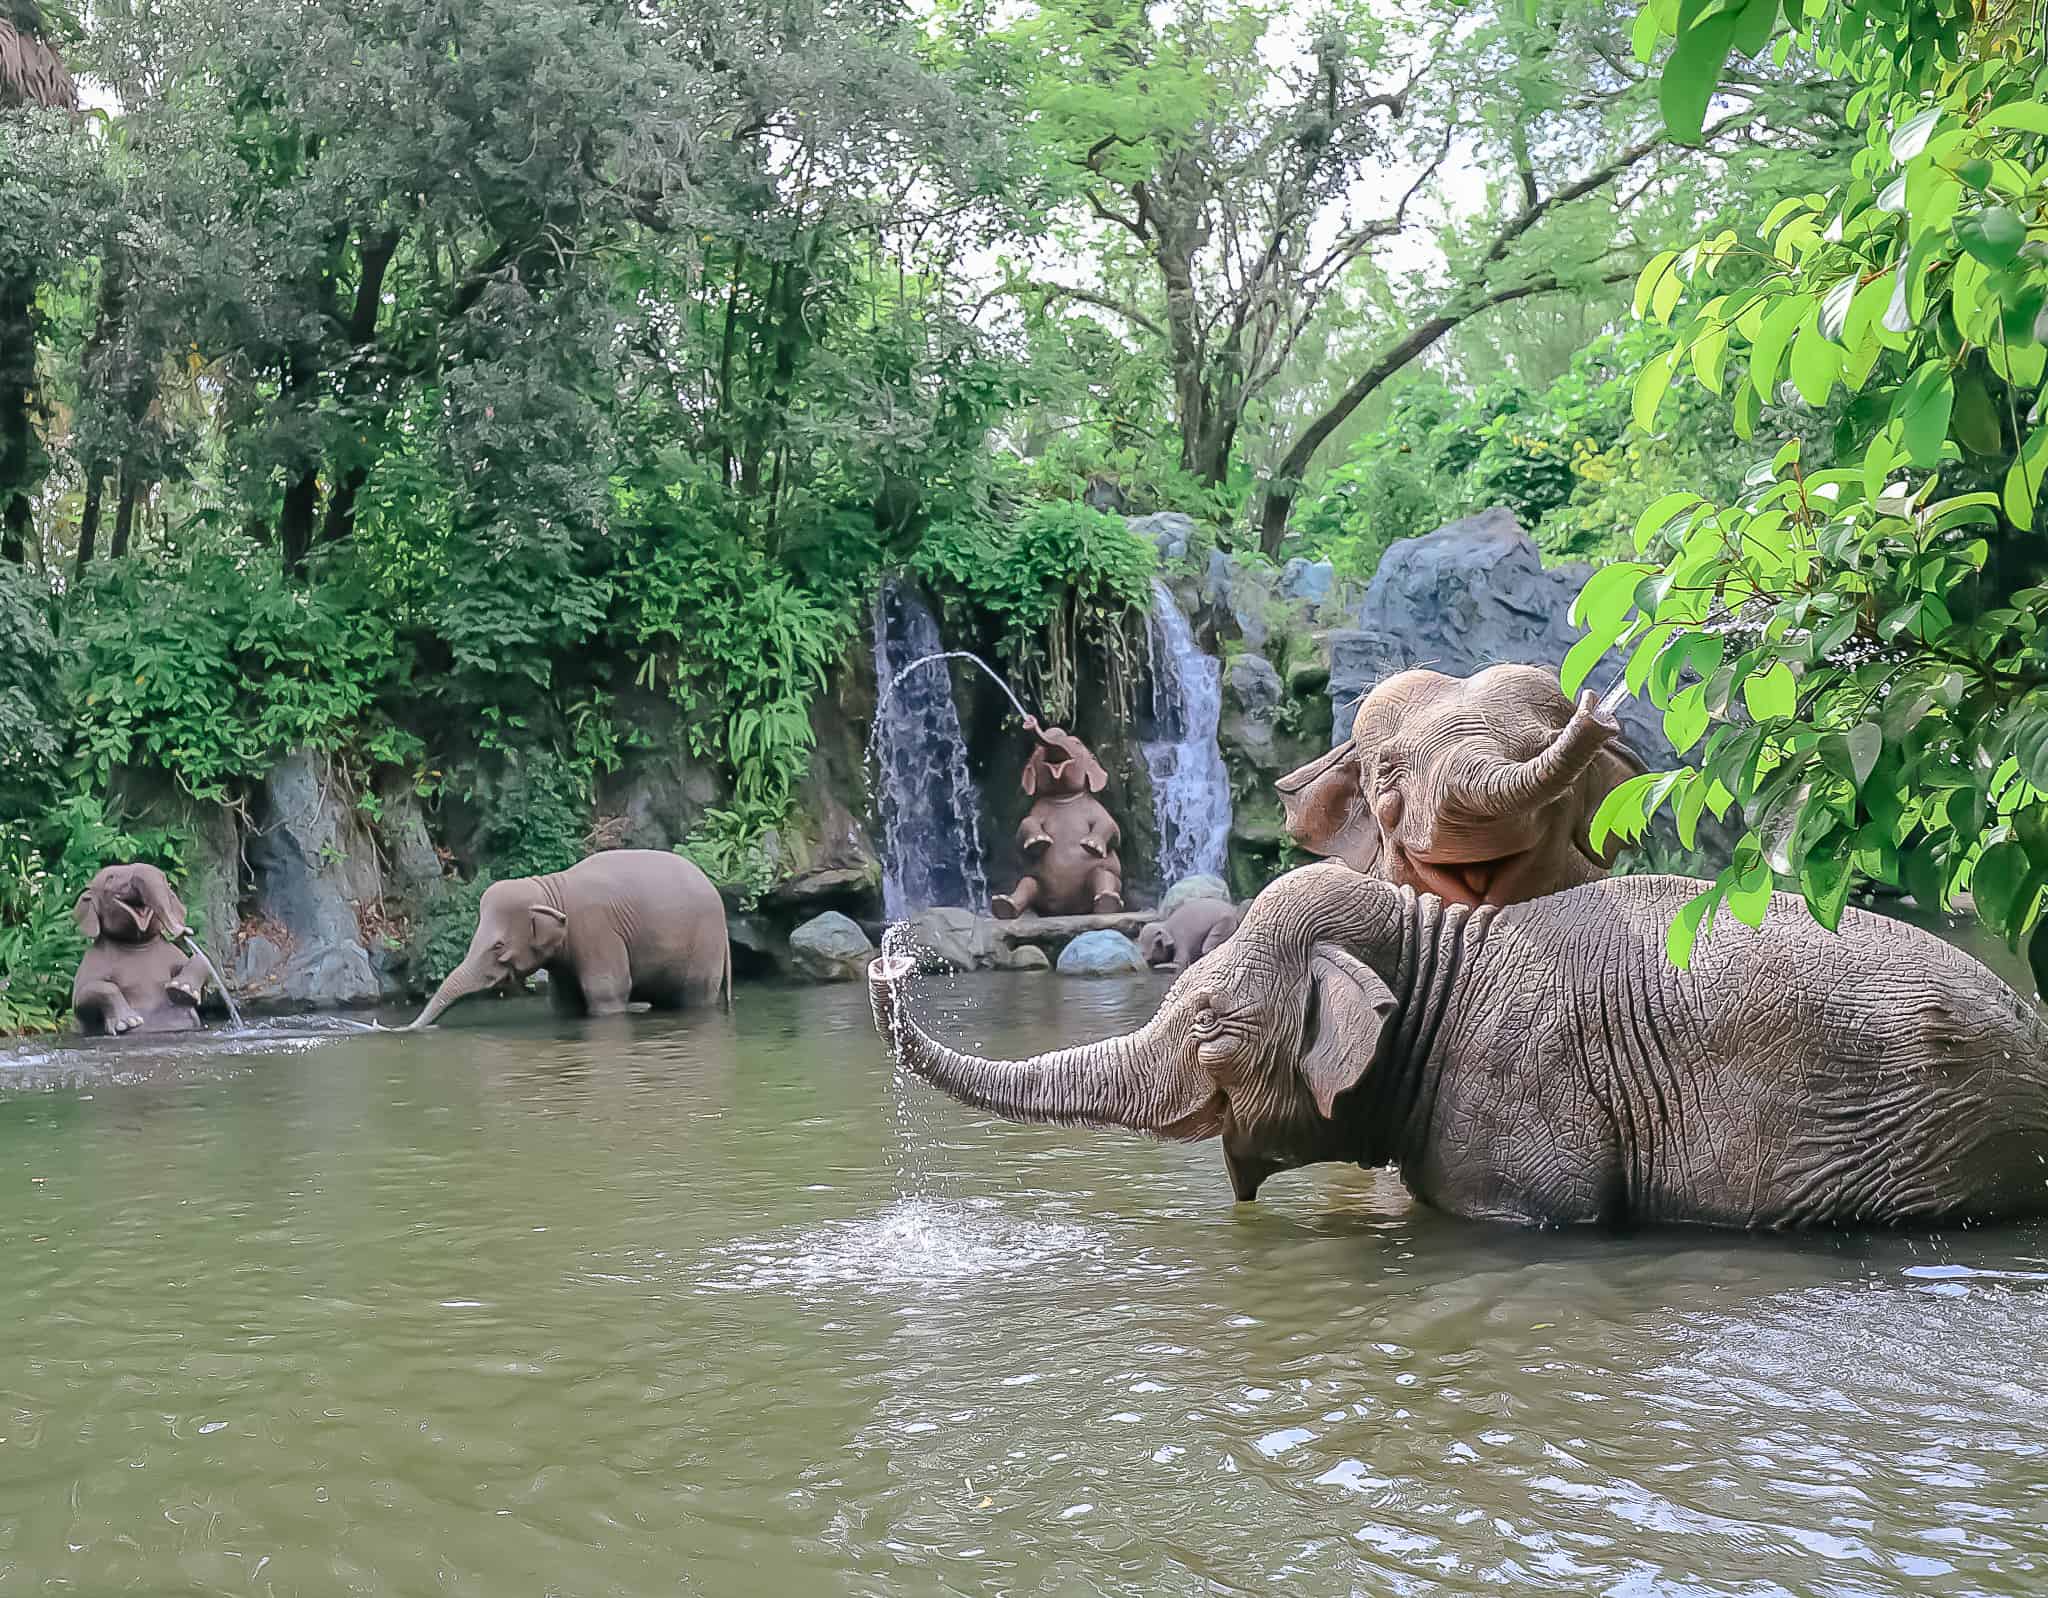 Elephants bathing scene in the Jungle Cruise ride at Magic Kingdom. 